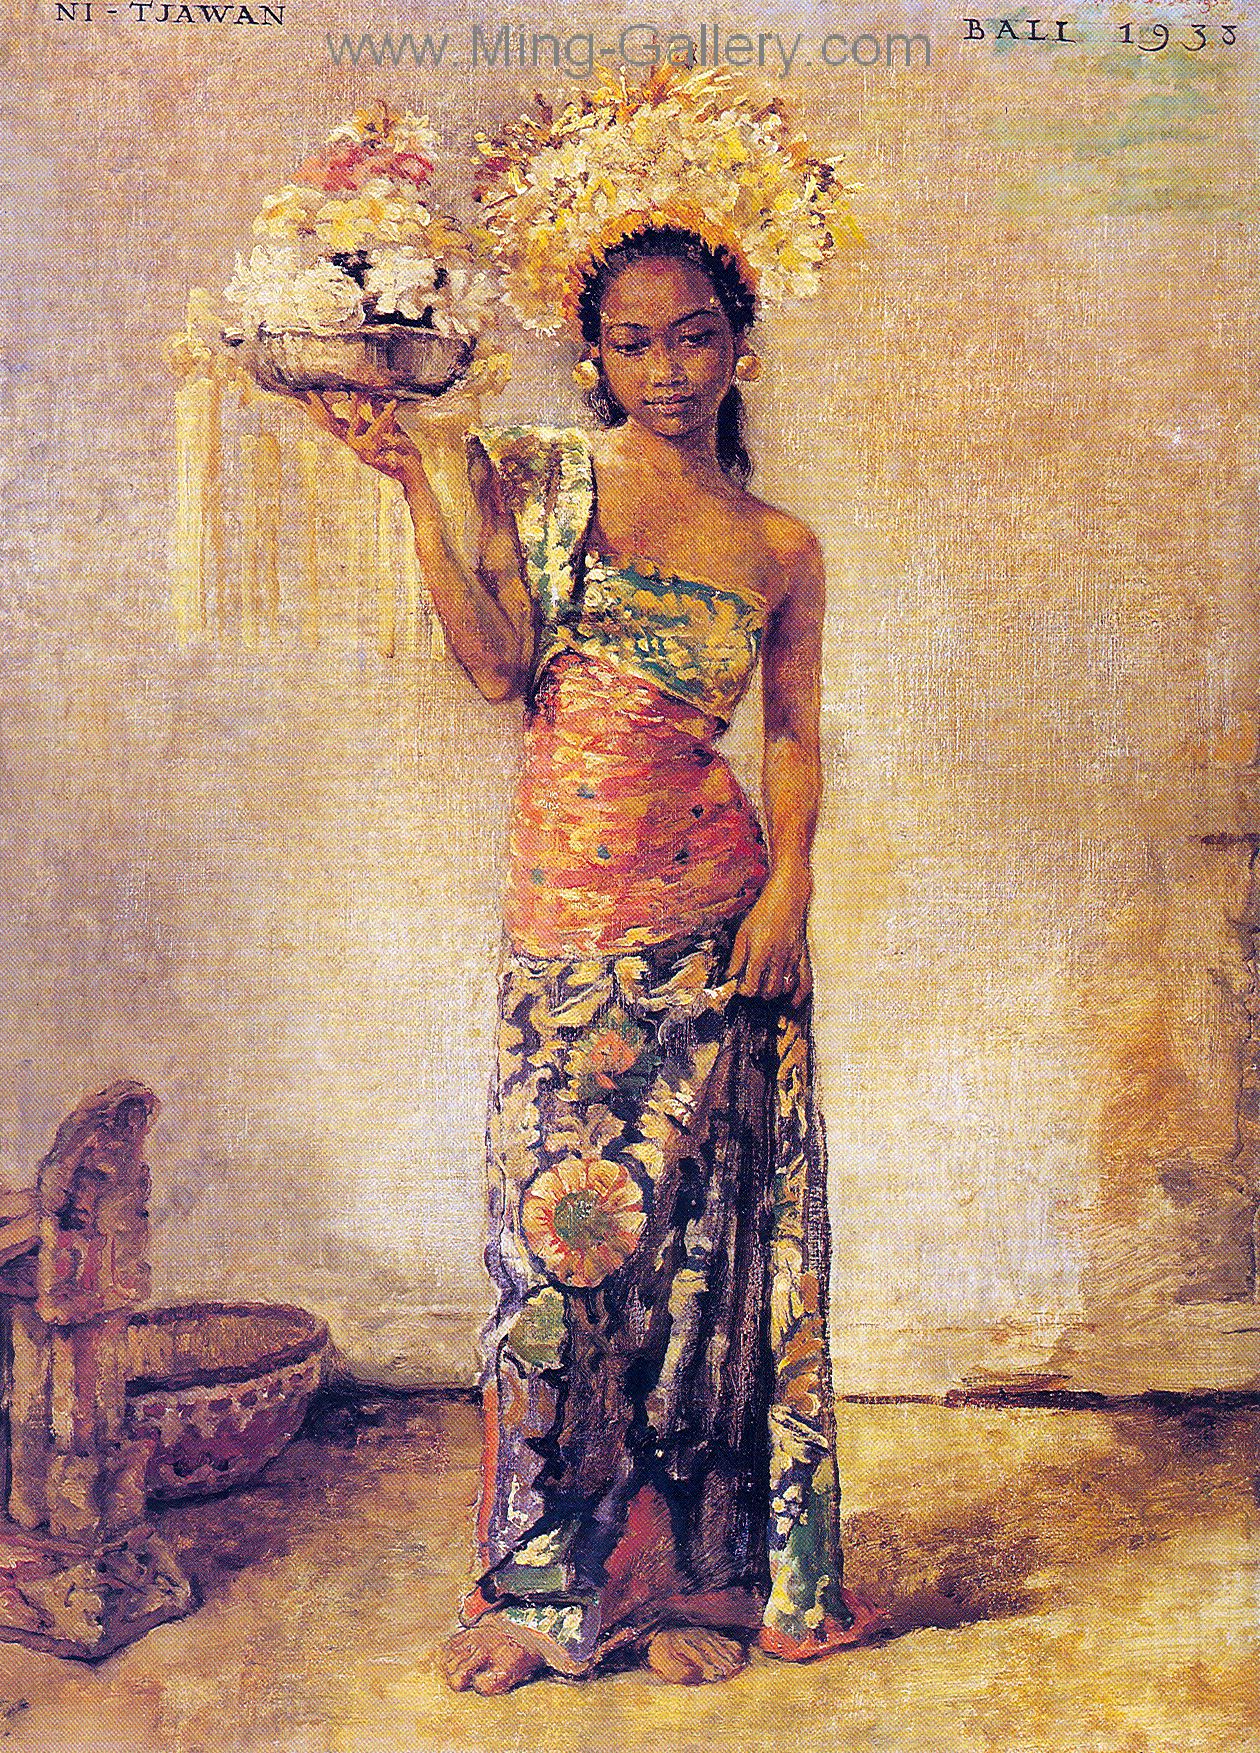 BAT0001 - Traditional Balinese Art Painting